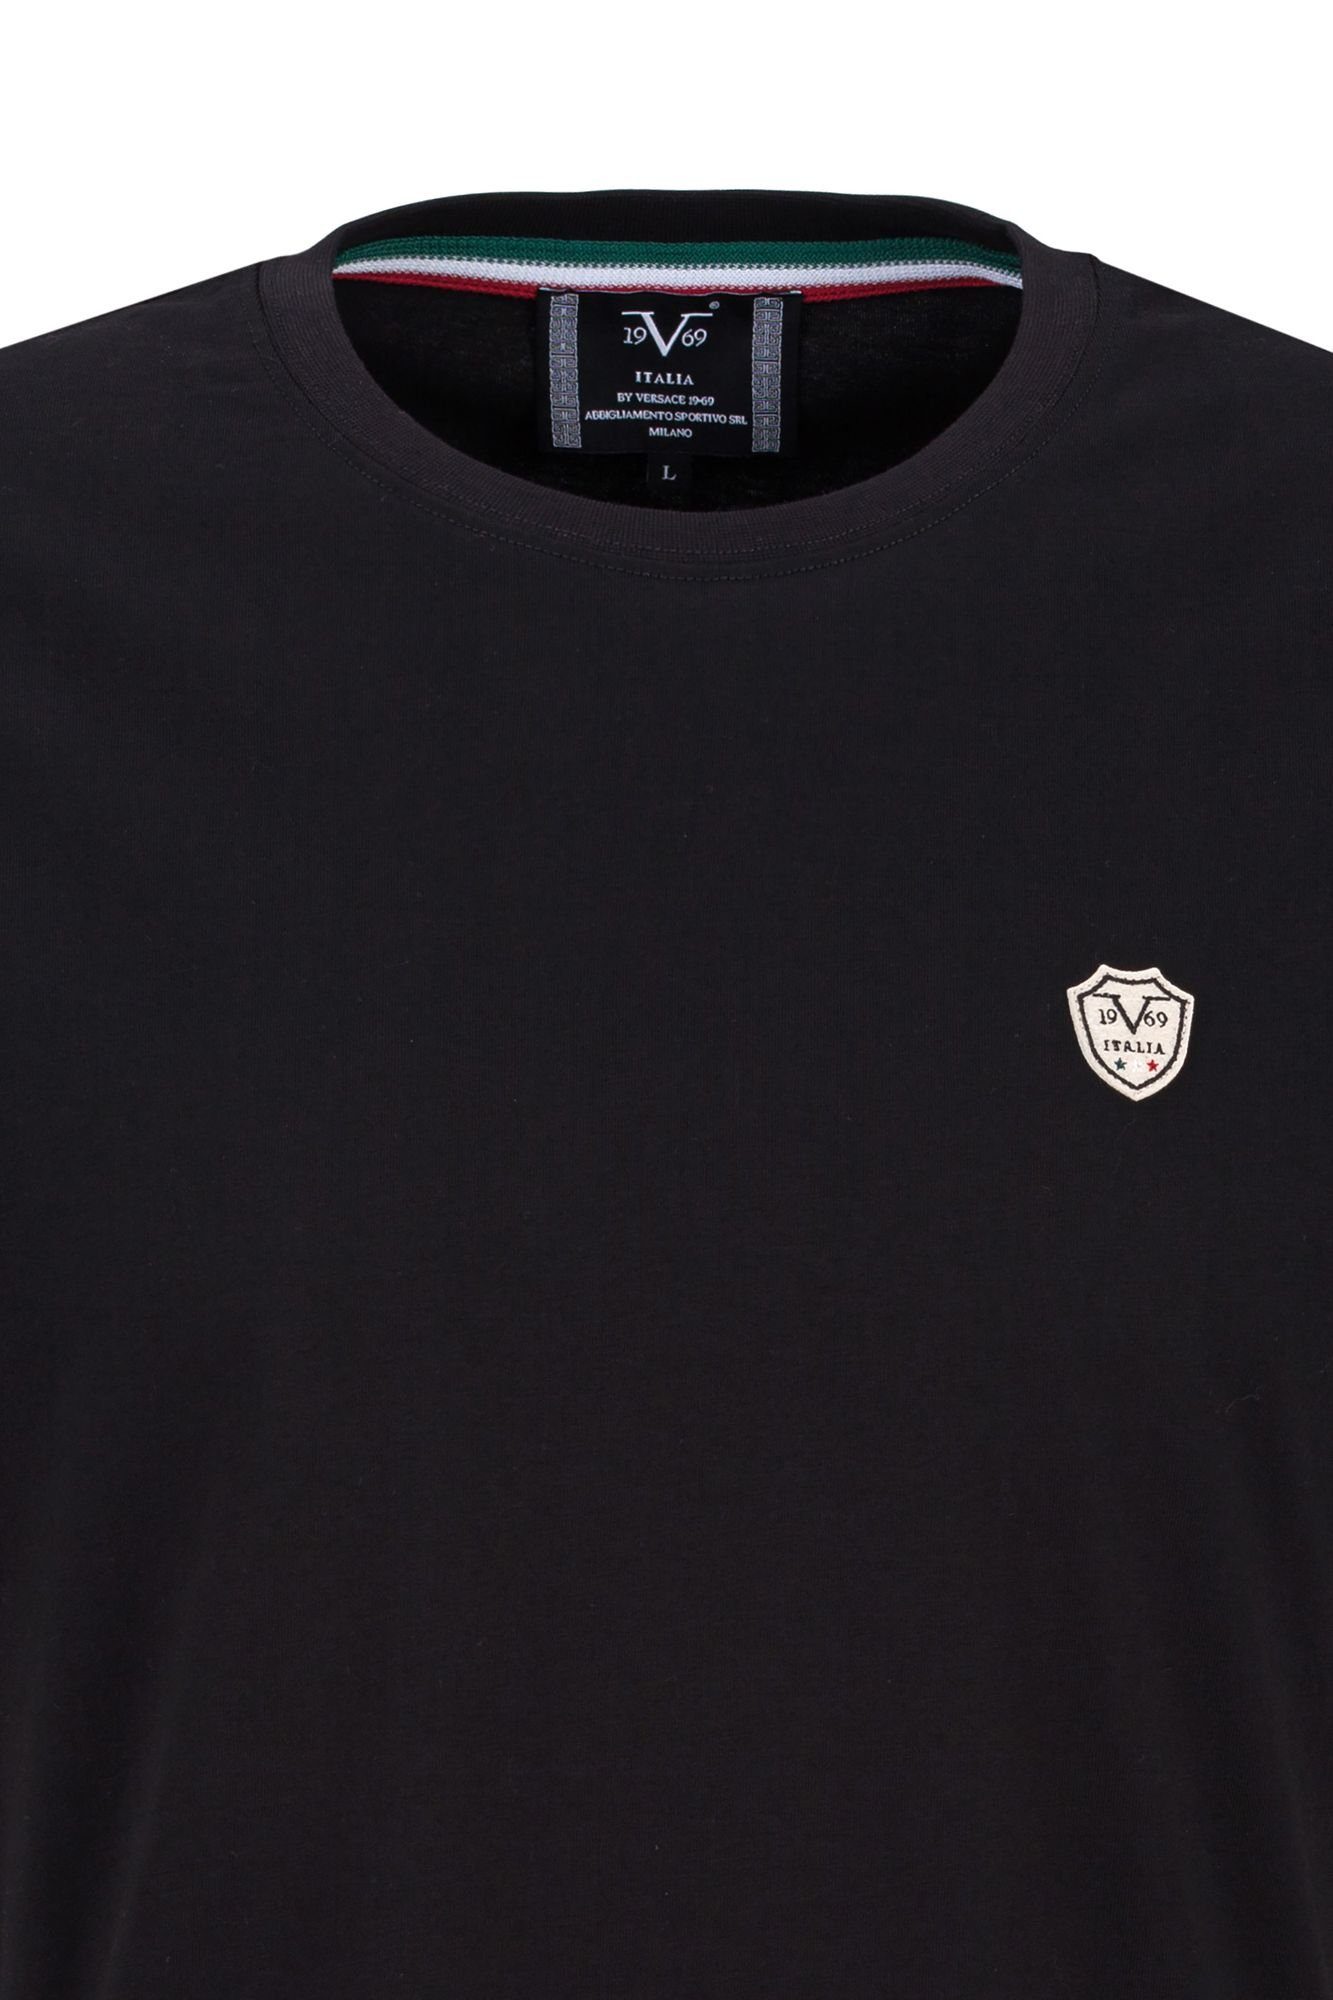 19V69 Italia Versace by SRL Versace Shield T-Shirt Rafael by - Sportivo